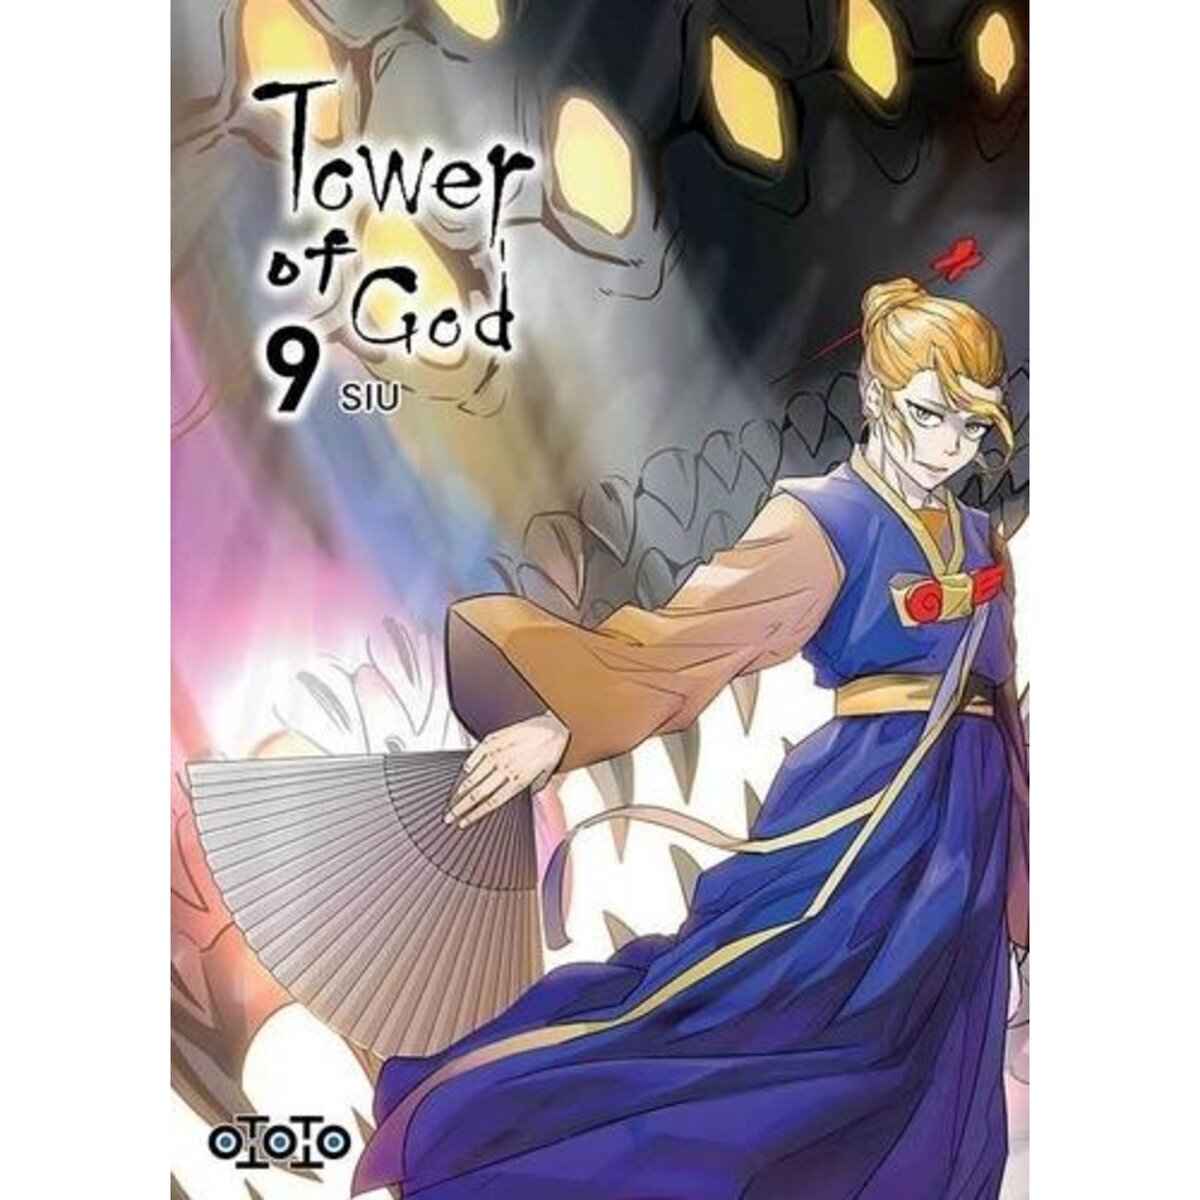  TOWER OF GOD TOME 9 , SIU